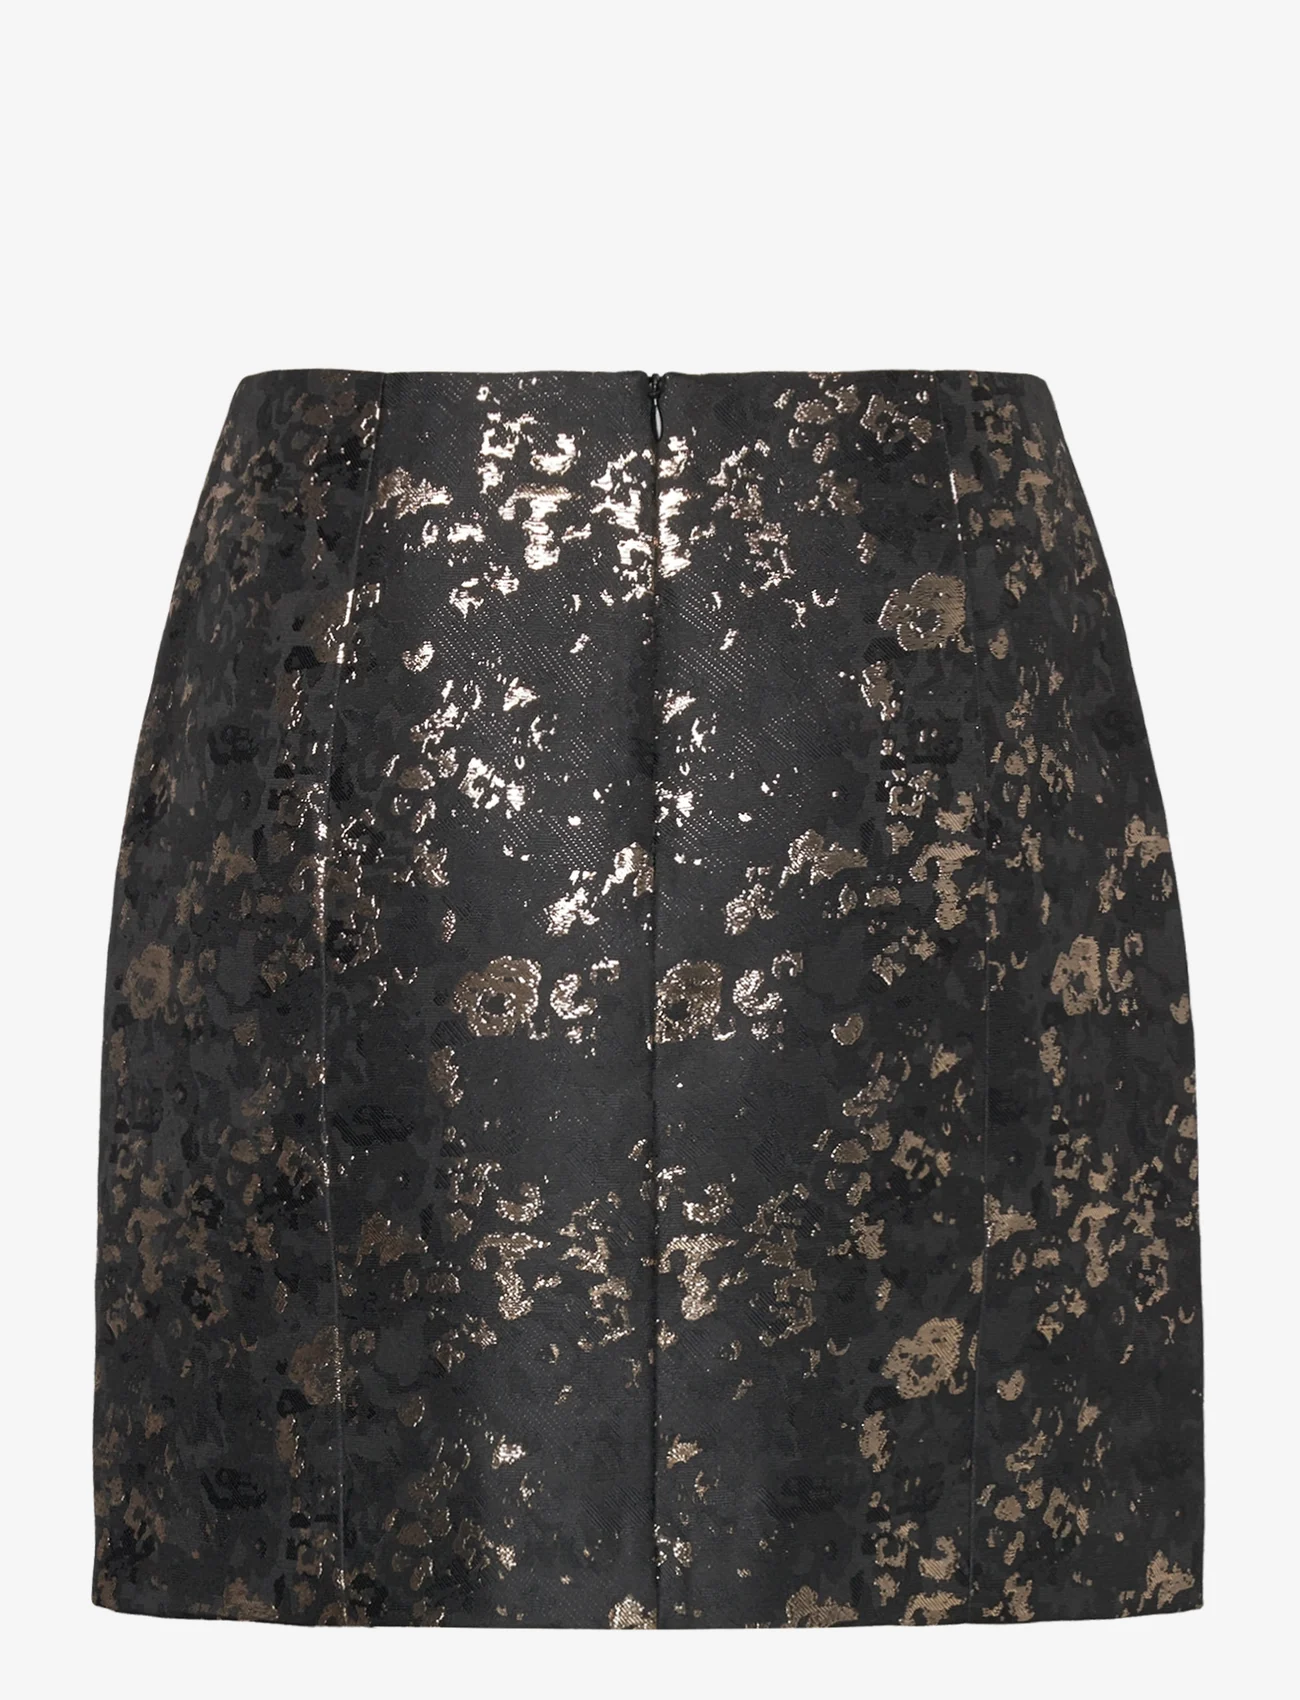 Bruuns Bazaar - CapeBBSusan skirt - ołówkowe spódnice - black/gold - 1